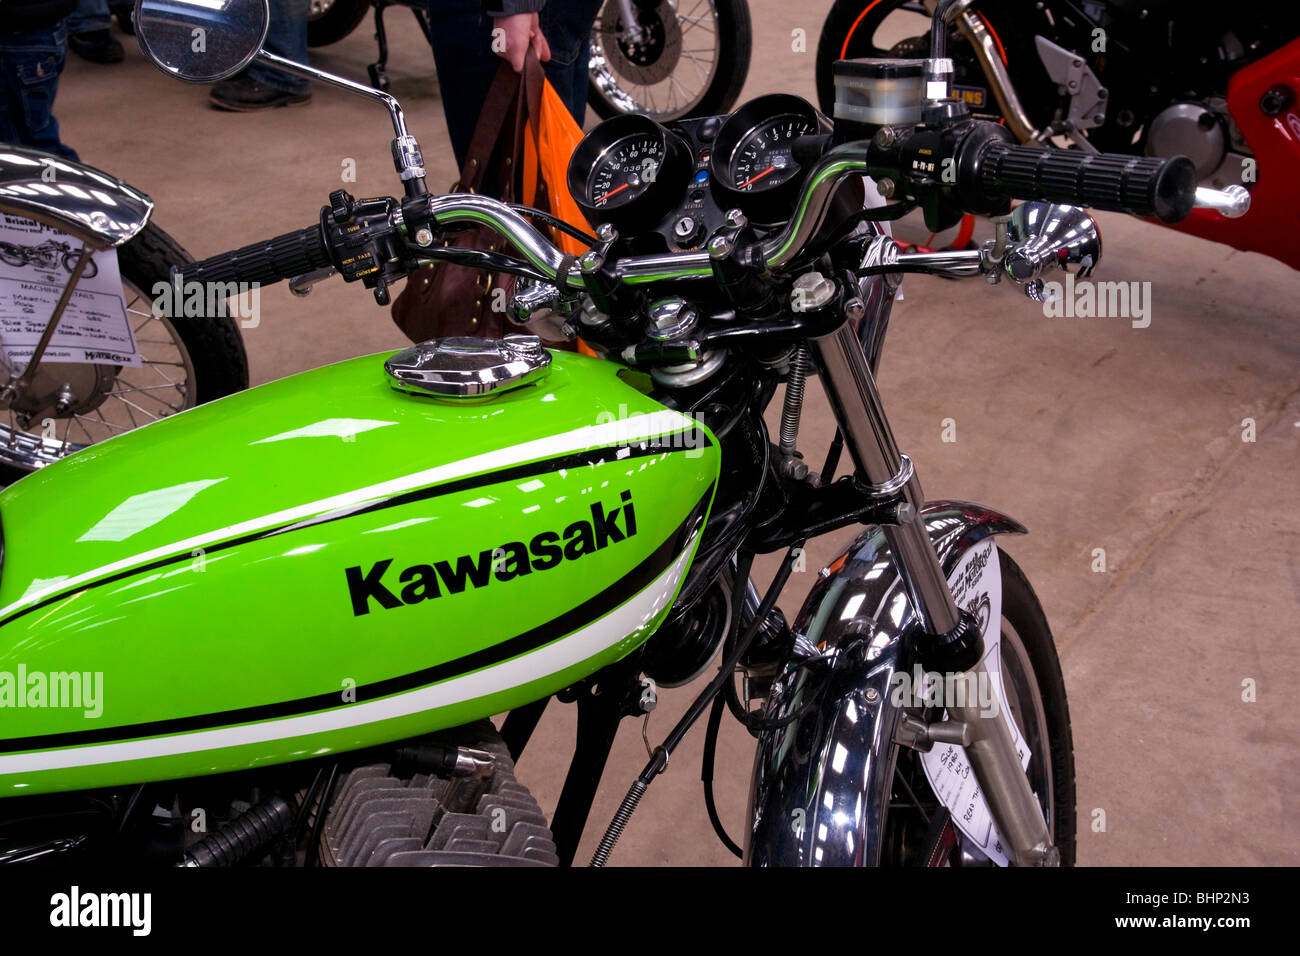 Kawasaki Kh250 High Stock Photography and Images - Alamy